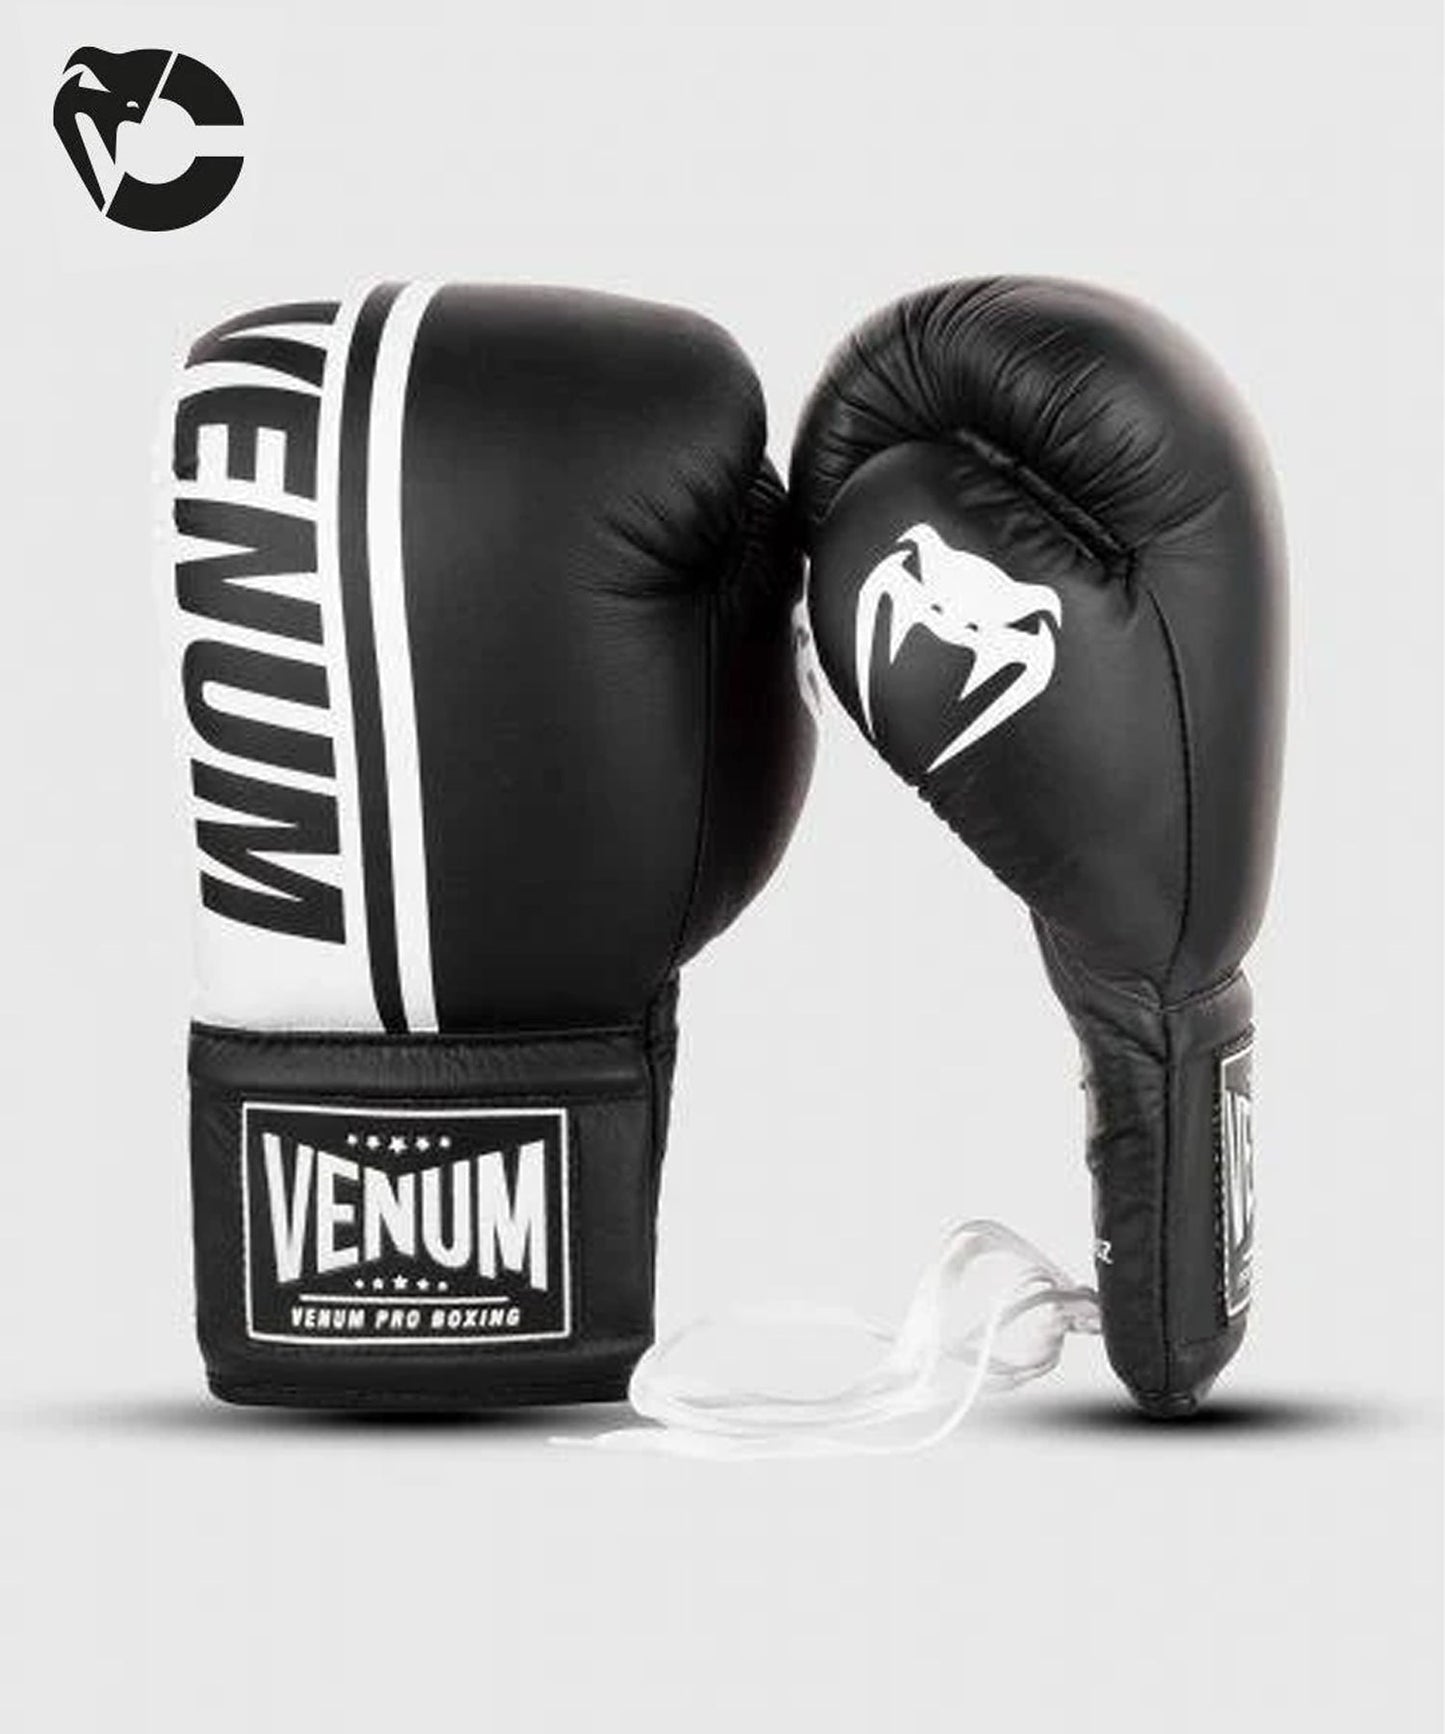 Venum Shield Custom Professional Boxhandschuhe mit Schnürsenkeln